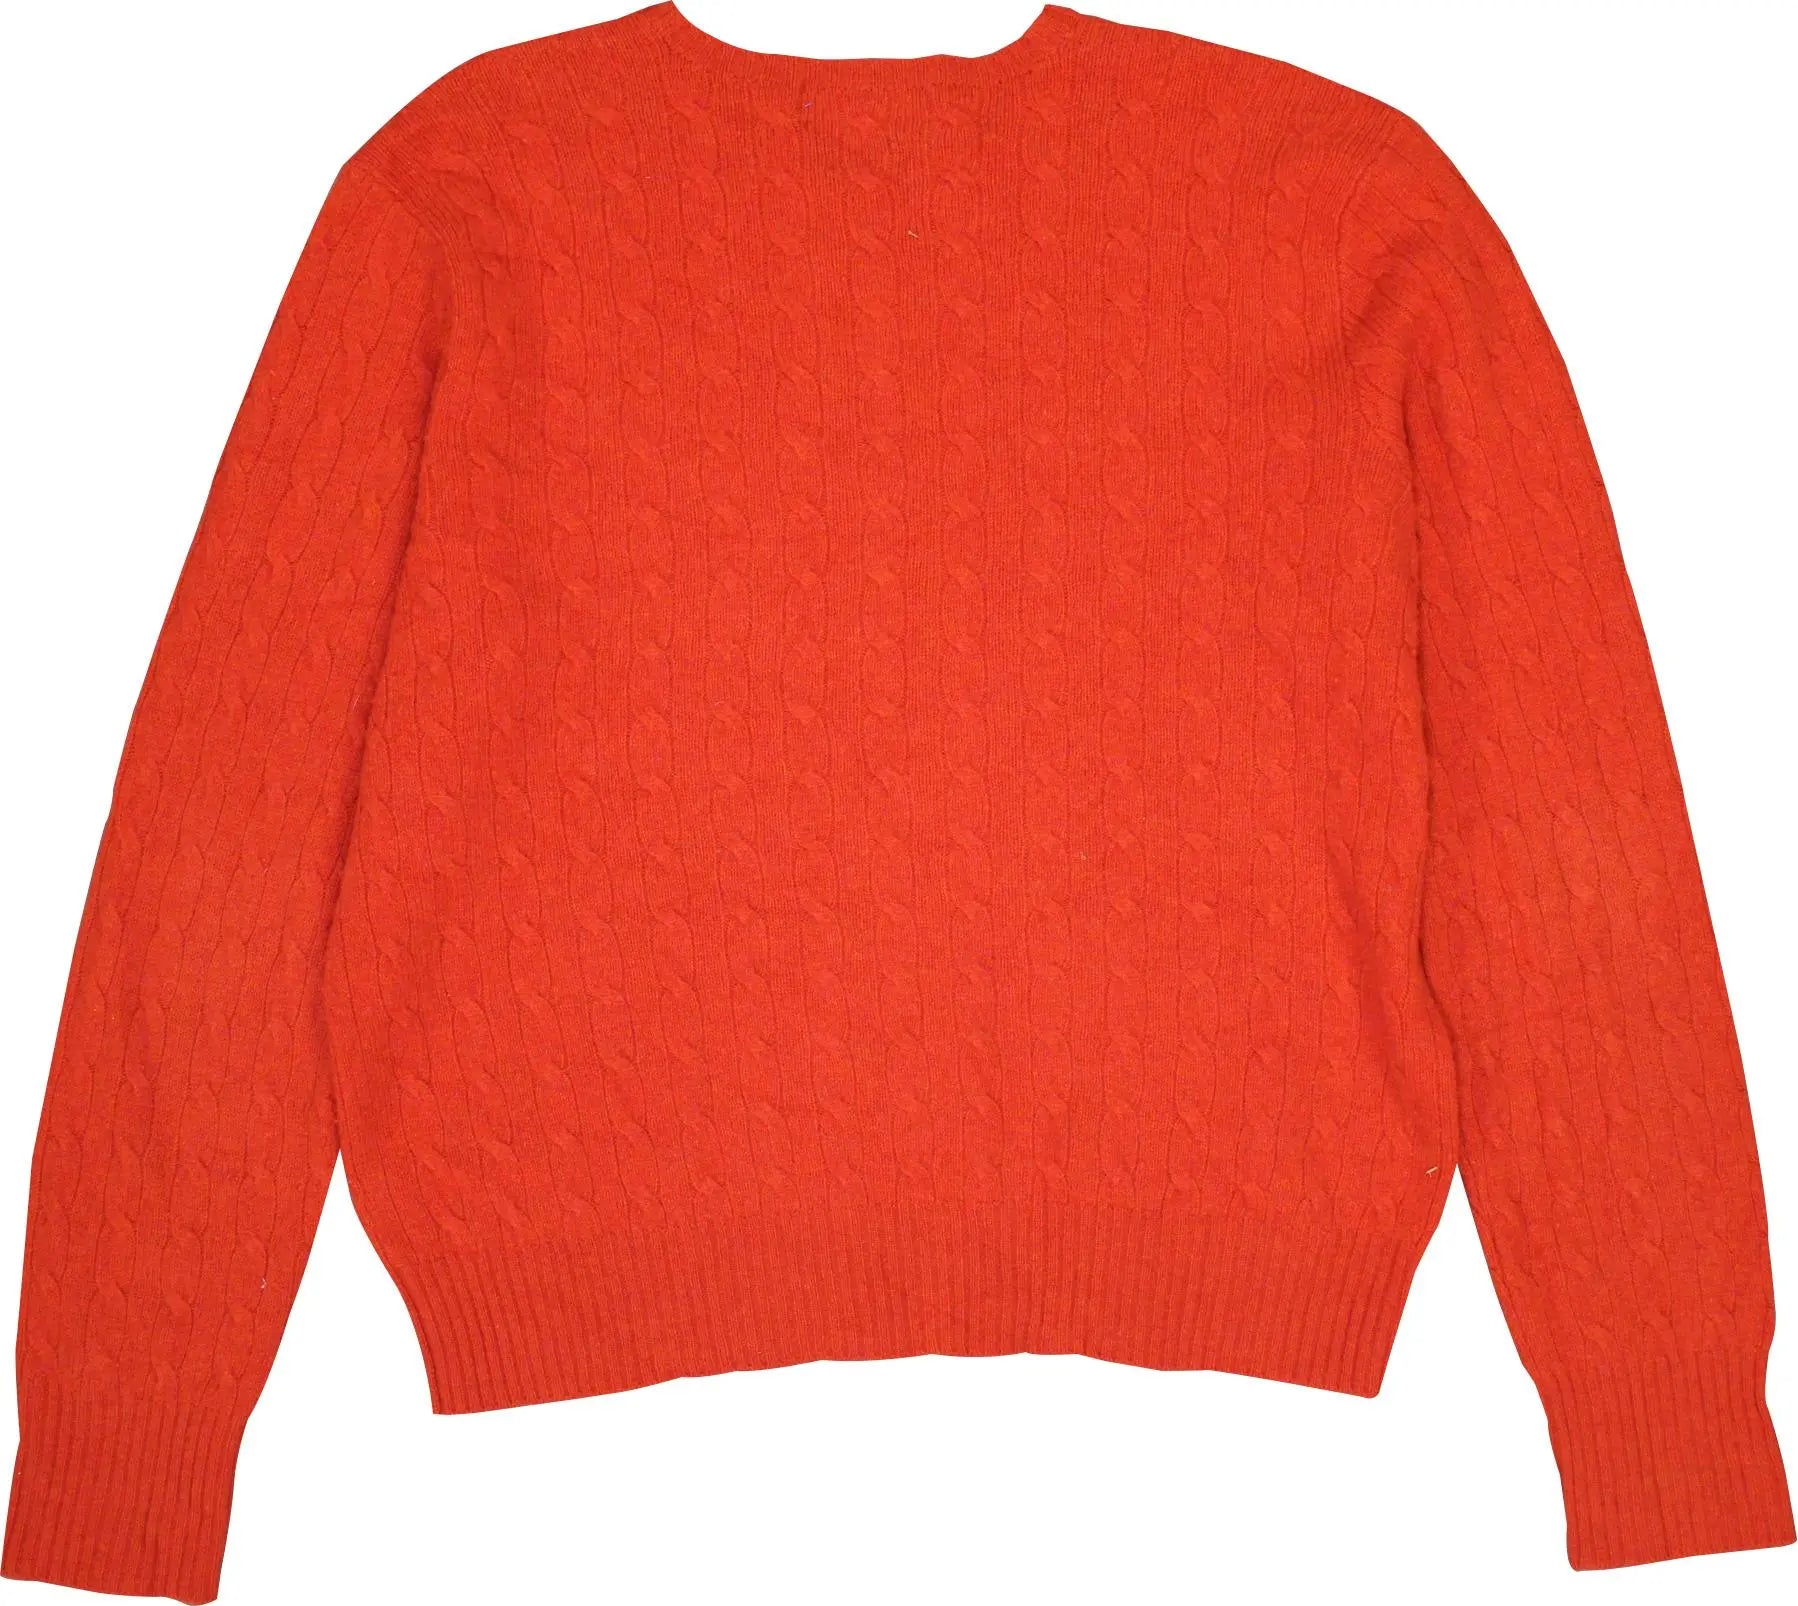 Ralph Lauren - Orange Pure Wool Sweater by Ralph Lauren- ThriftTale.com - Vintage and second handclothing